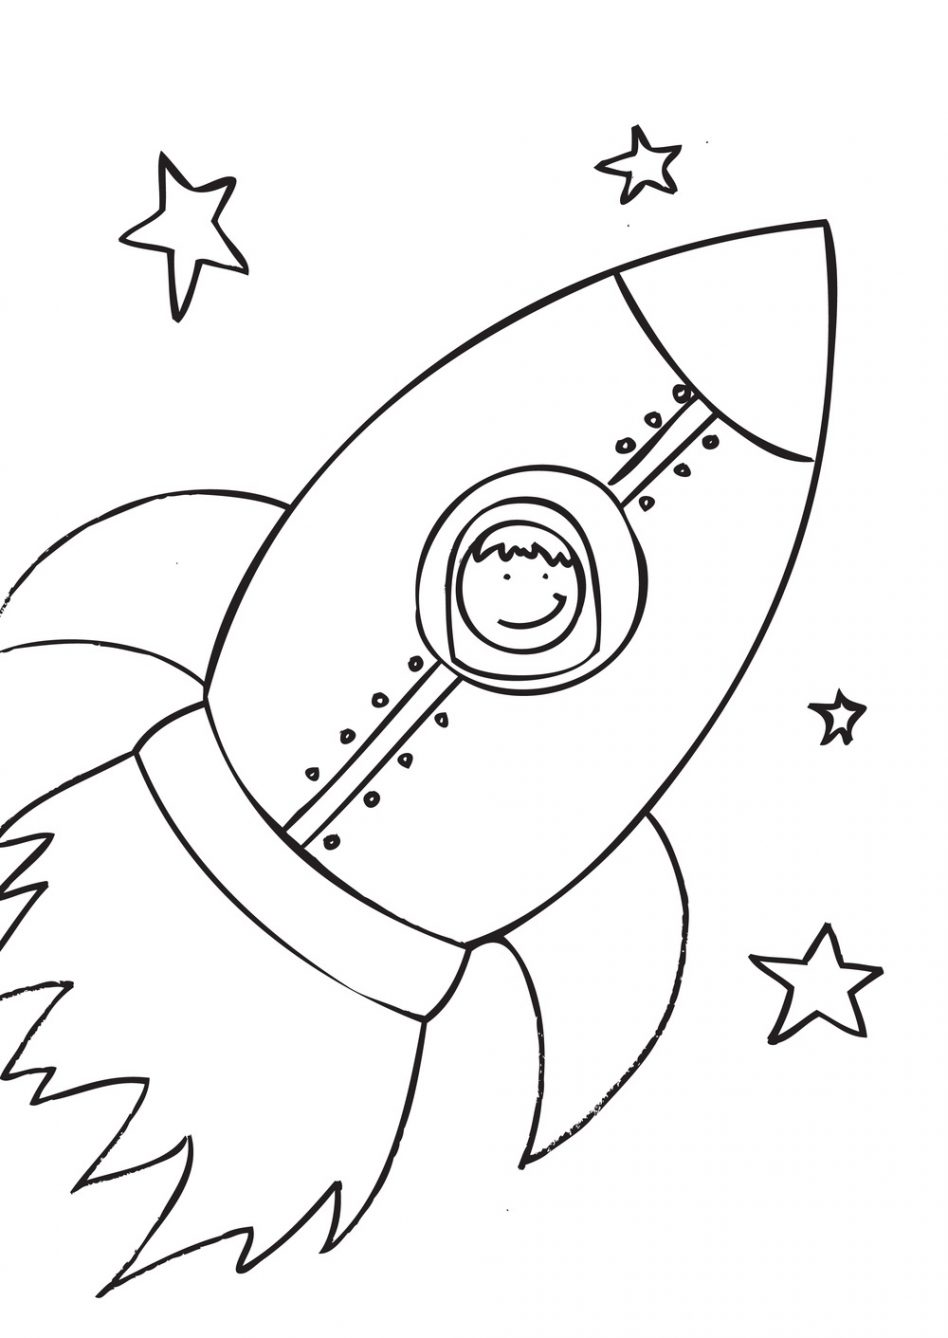 Nasa Spaceship Drawing At GetDrawings Free Download